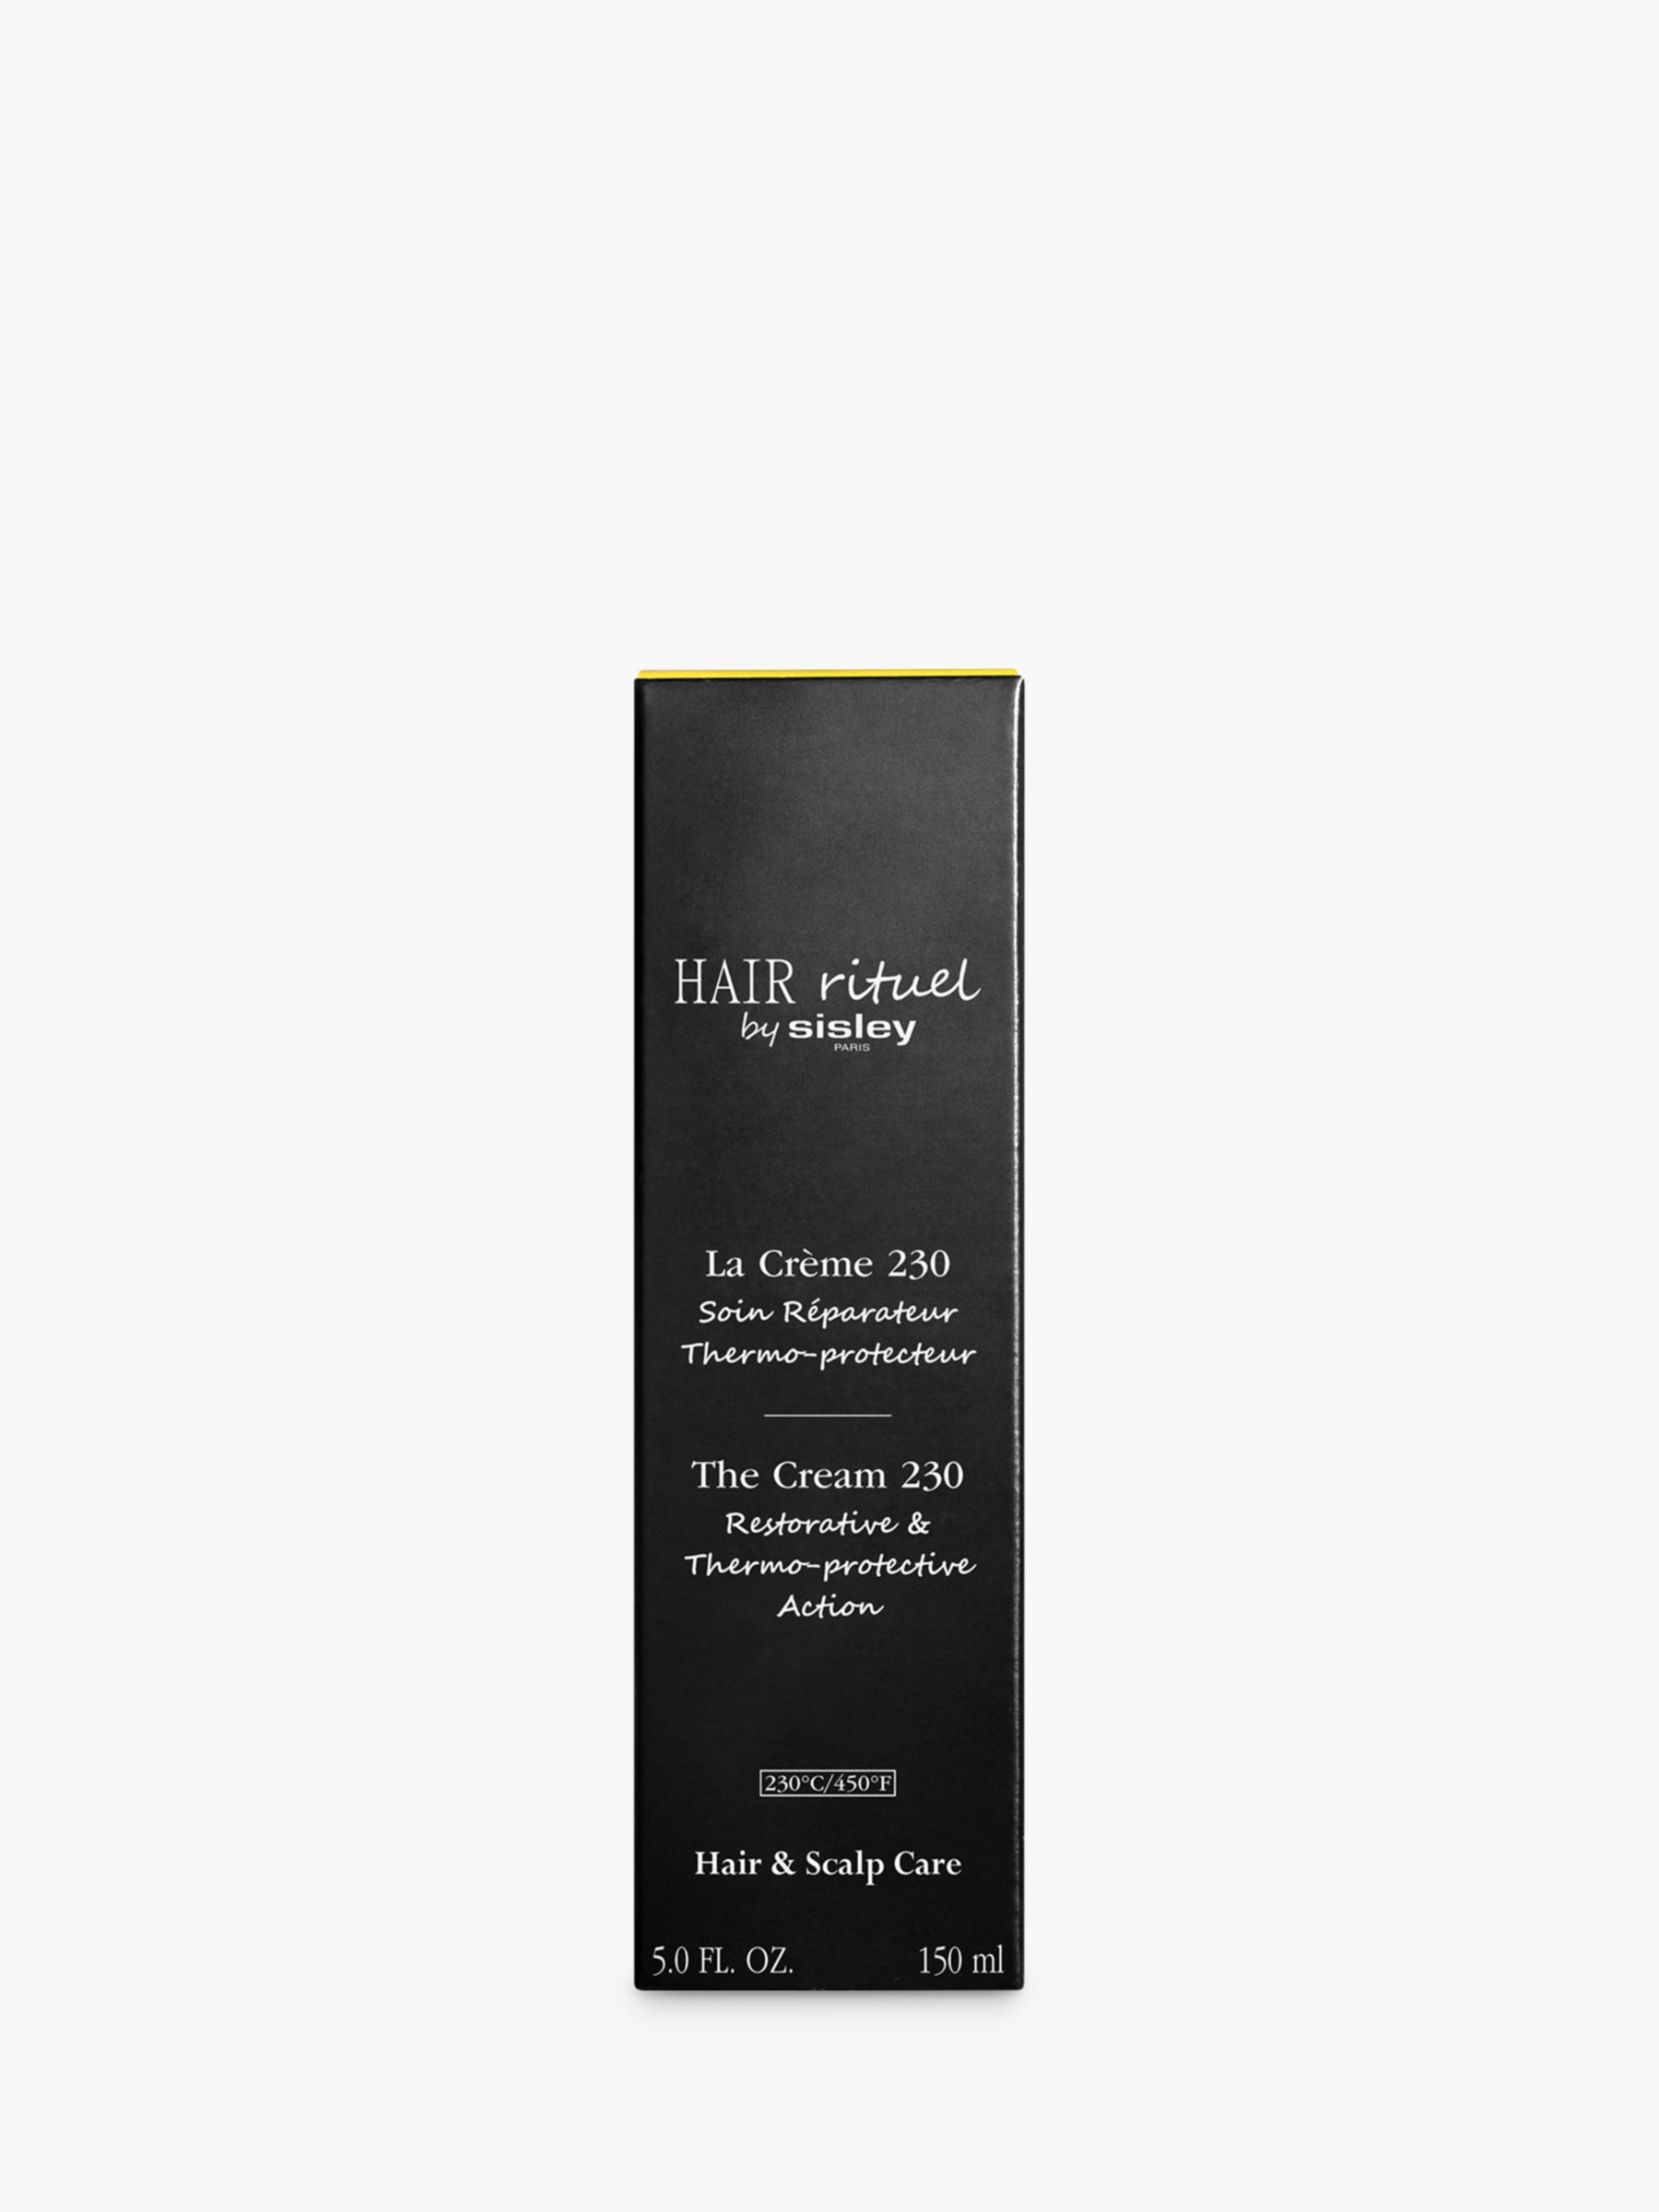 Sisley-Paris Hair Rituel The Cream 230 Restorative & Thermo-Protective Action Hair & Scalp Care, 150ml 7